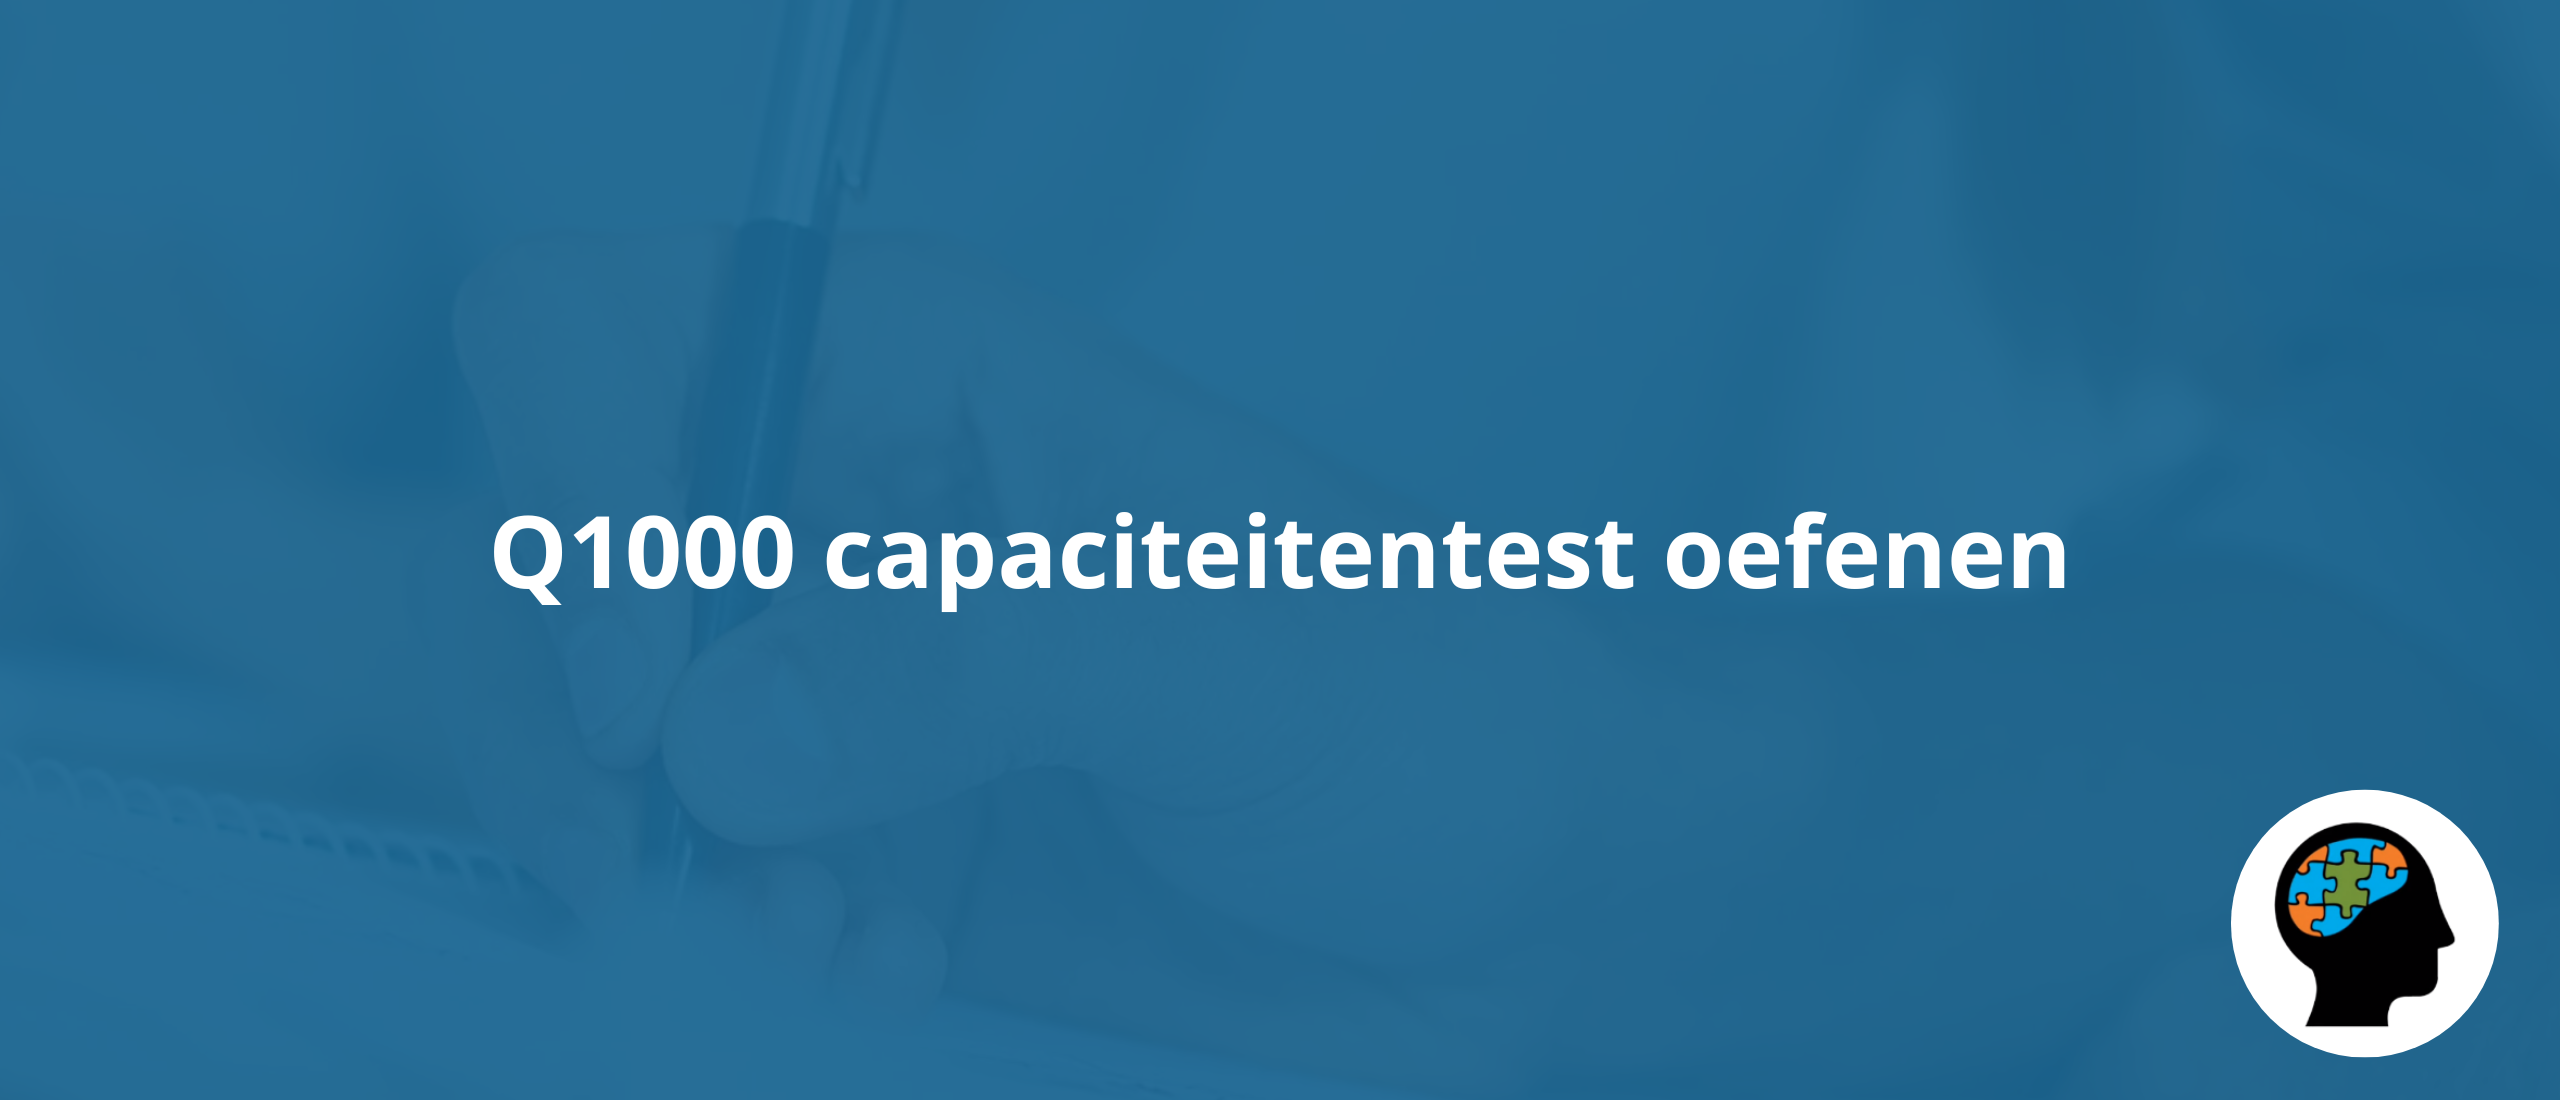 Q1000 capaciteitentest oefenen